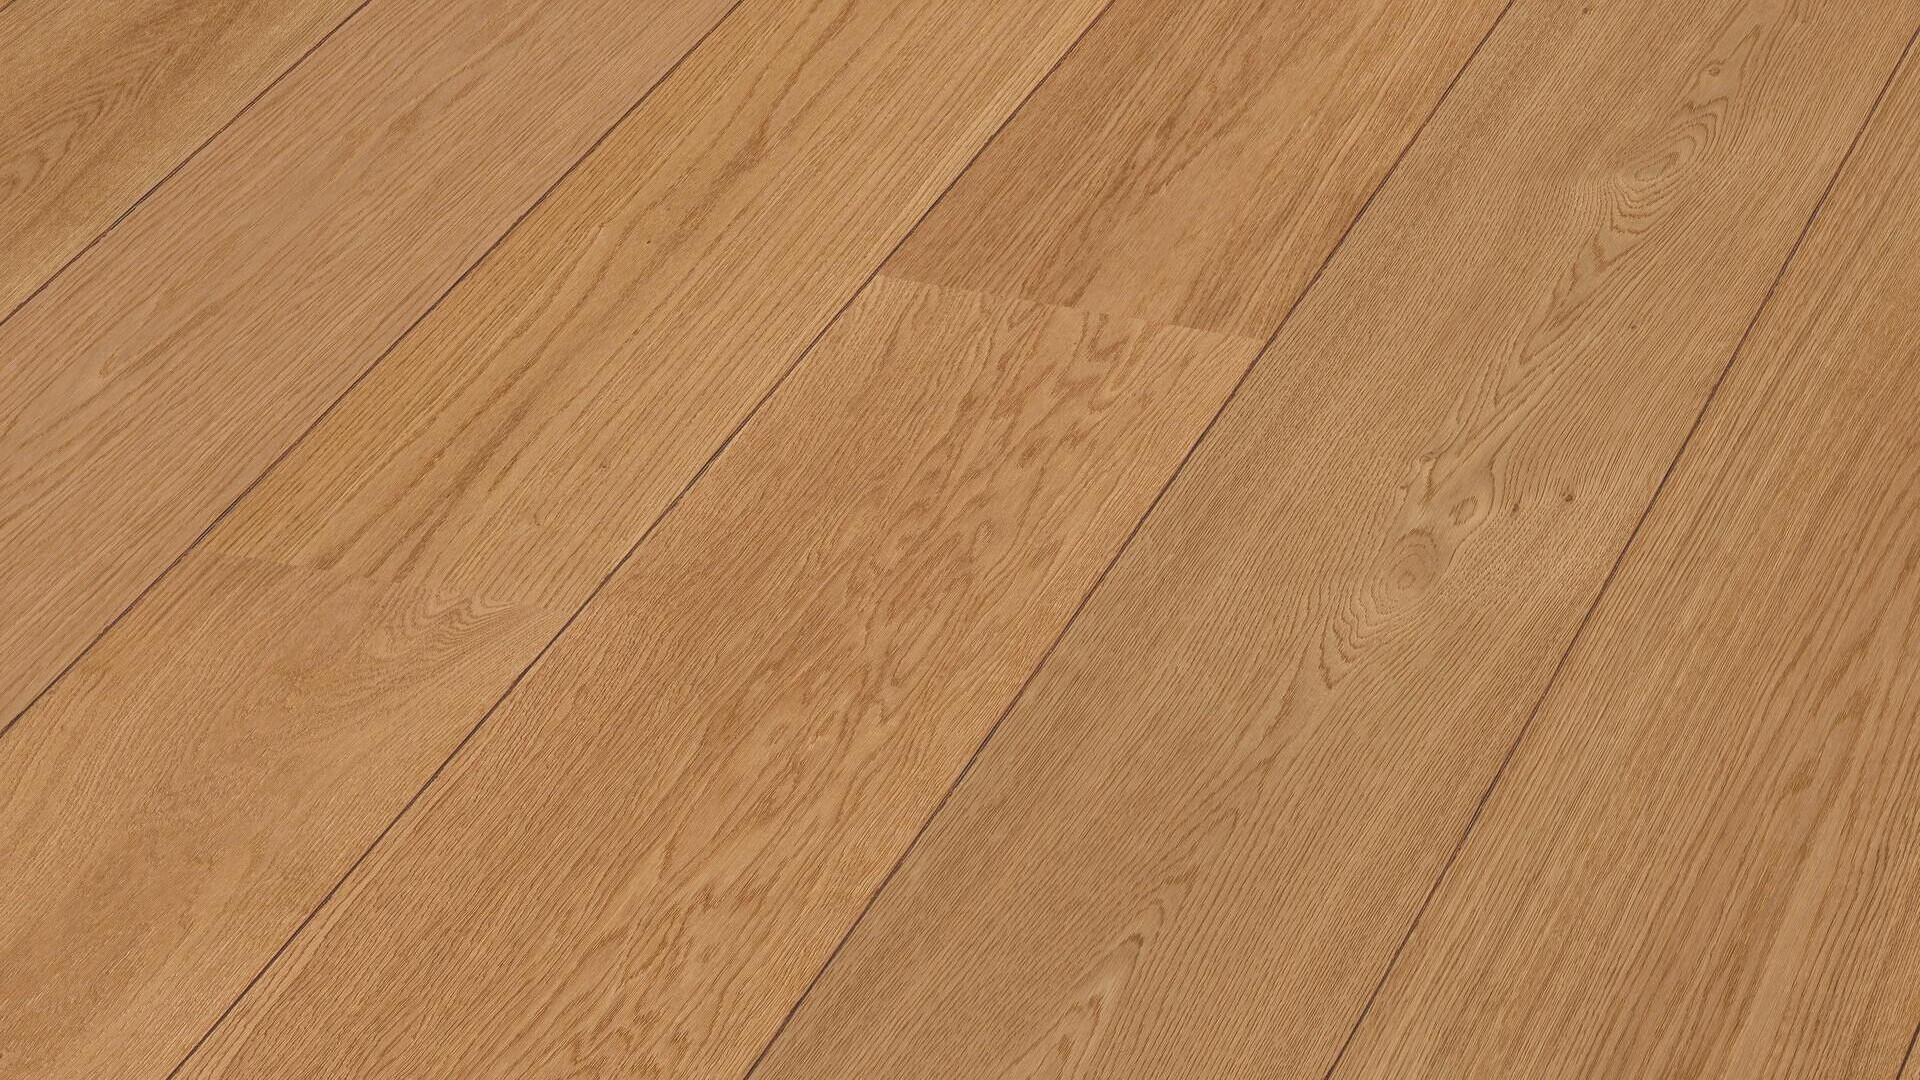 Natural grading Lindura wood flooring